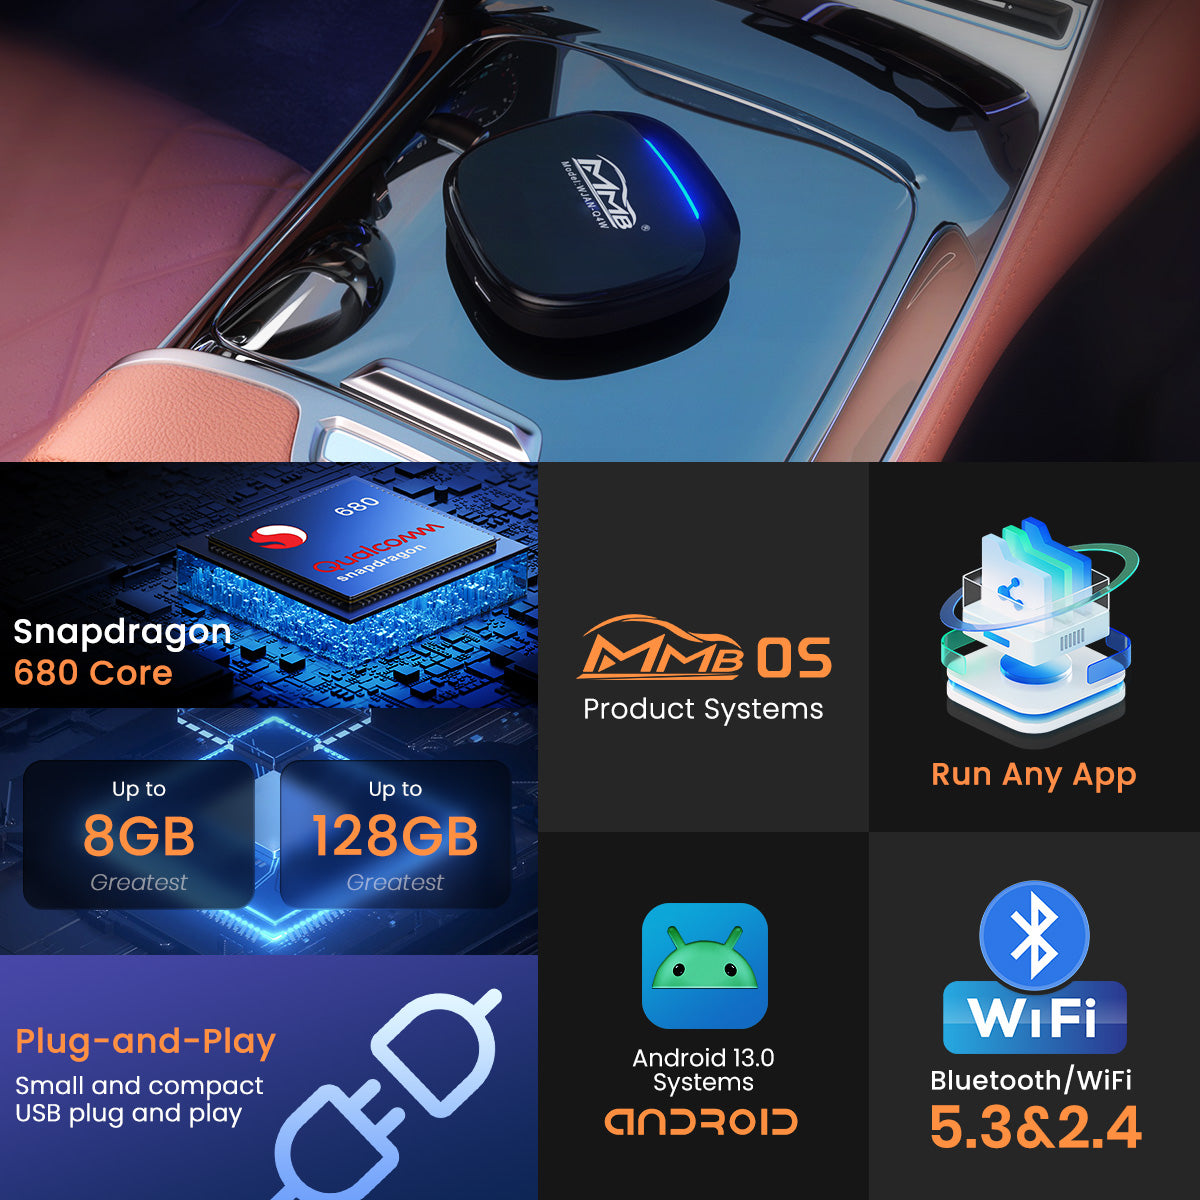 MMB MAX 2.0 Wireless CarPlay + Android Auto + Mirror + YouTube HDMI Video AI Box 4 GB + 64 GB / 8 GB + 128 GB für Autos von 2017–2023 mit werkseitig verkabeltem CarPlay